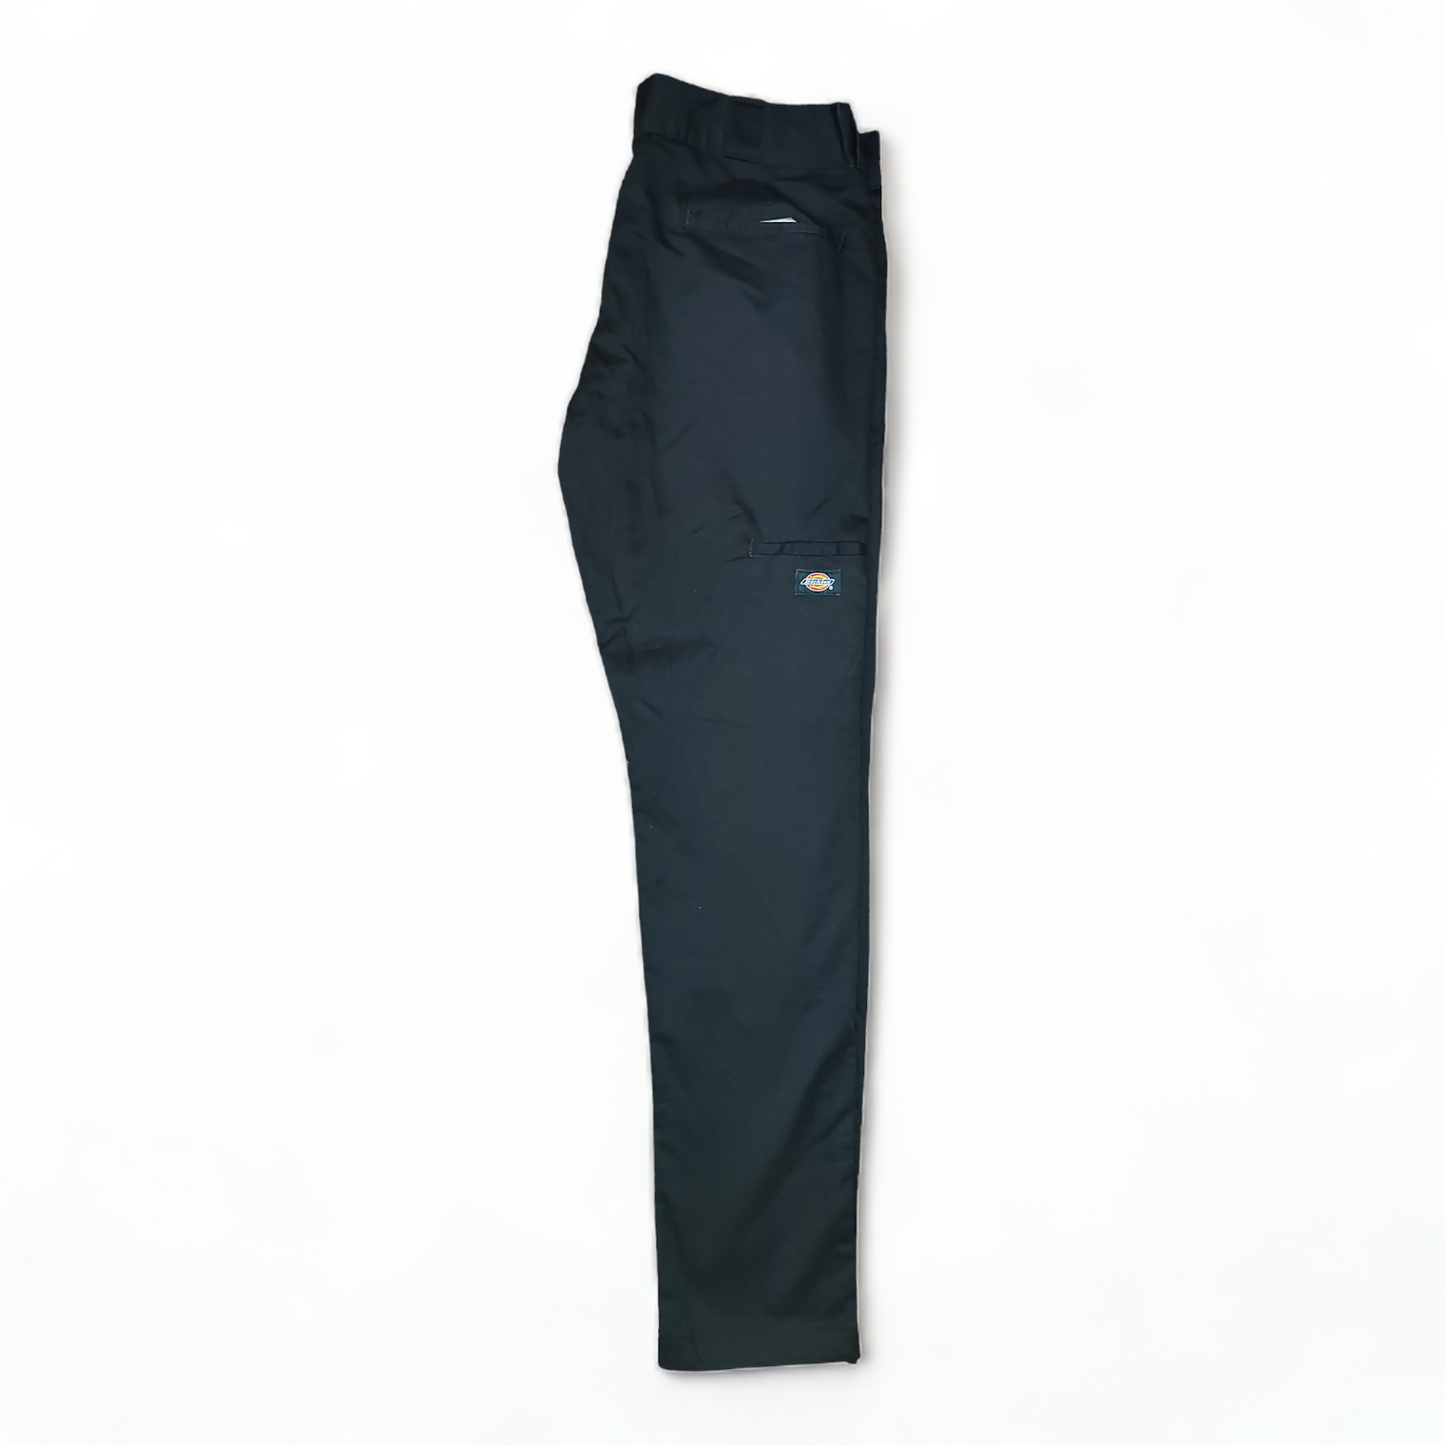 Dickies Trousers Mens W35 Black – 35 x 32 – Skinny Straight